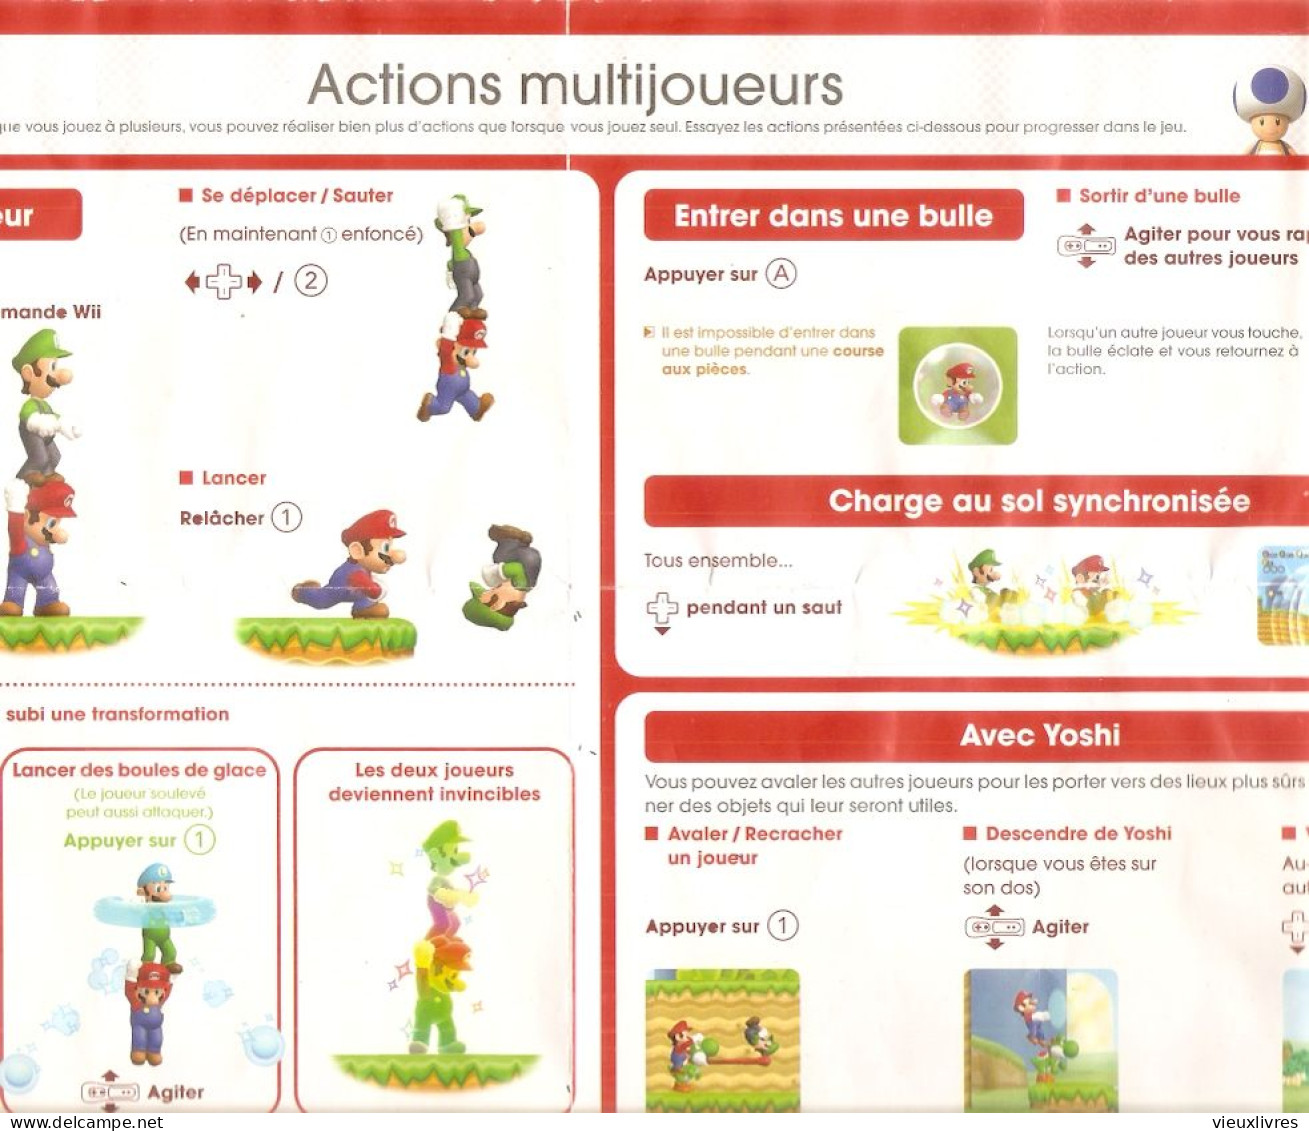 Super Mario Bros WII Mini Guide Multijoueur - Literatur Und Anleitungen